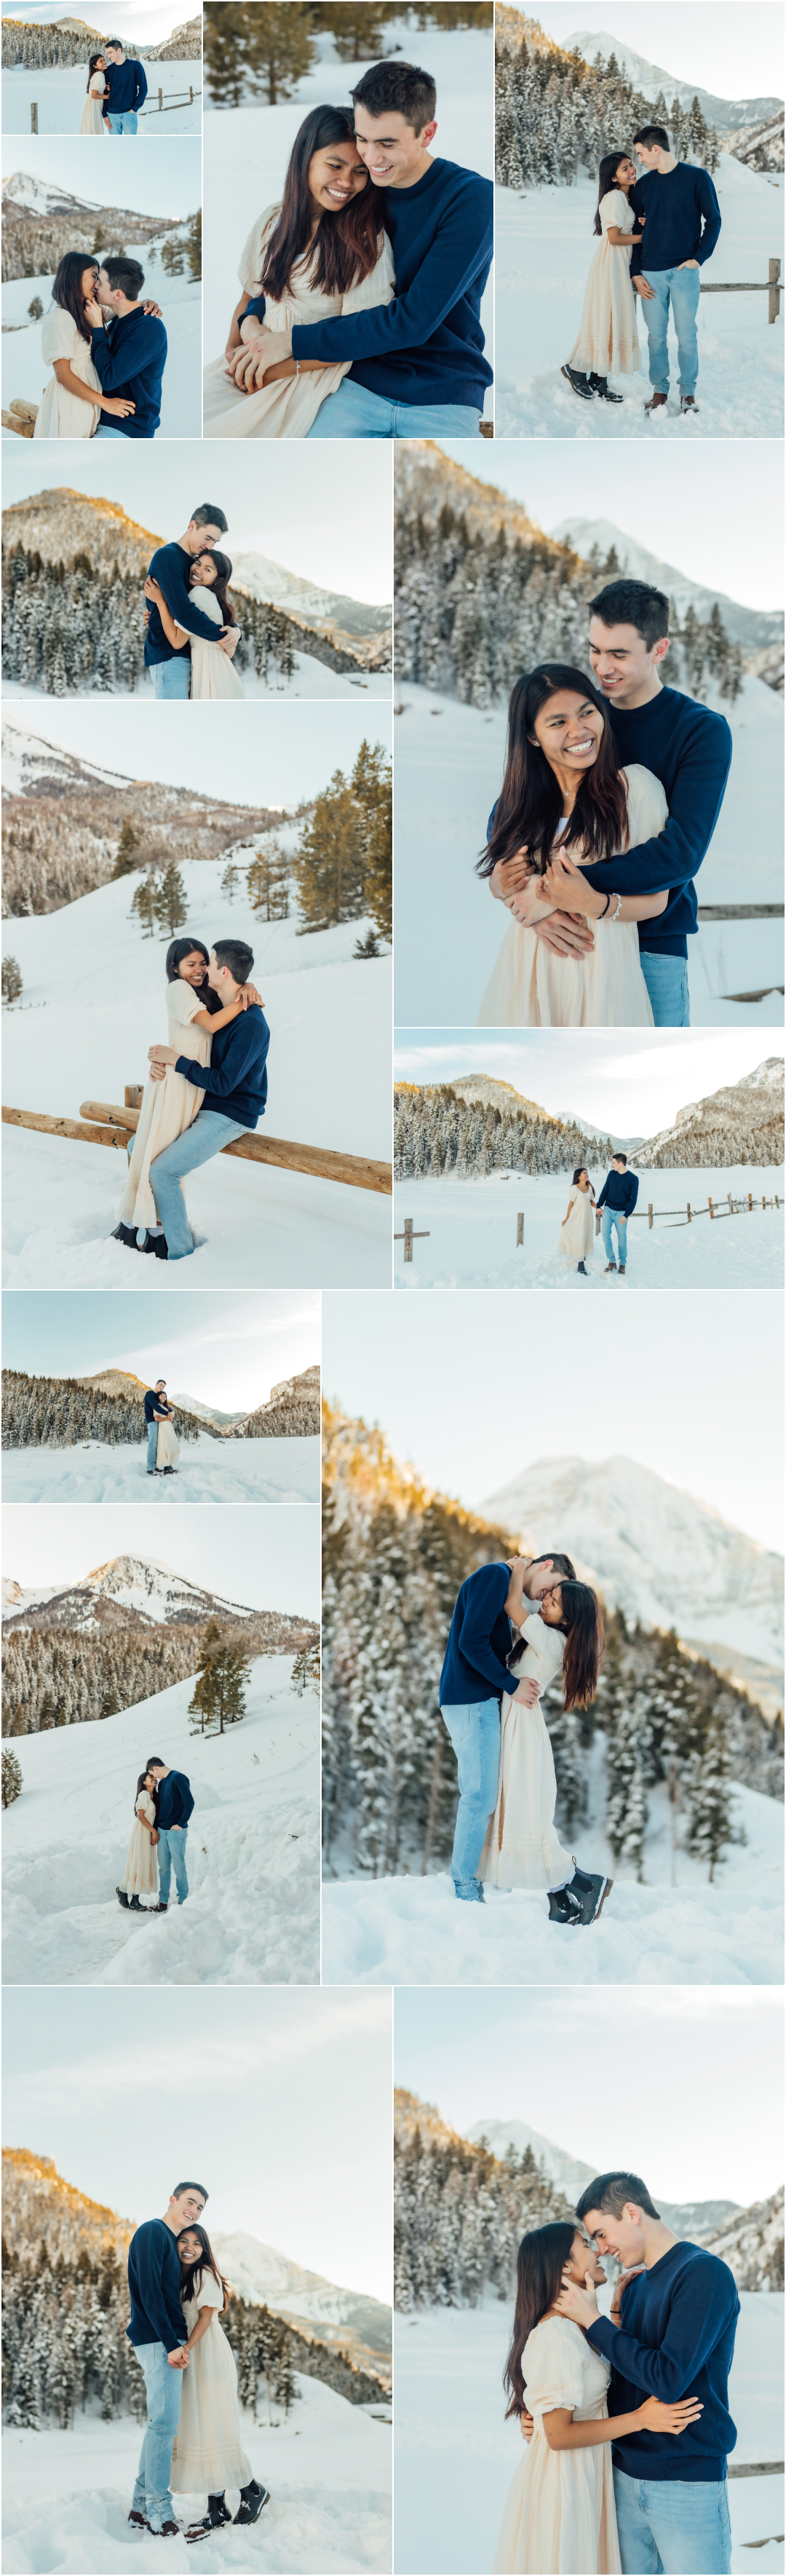 Snowy Winter Engagements - Tibble Fork Utah Photographer